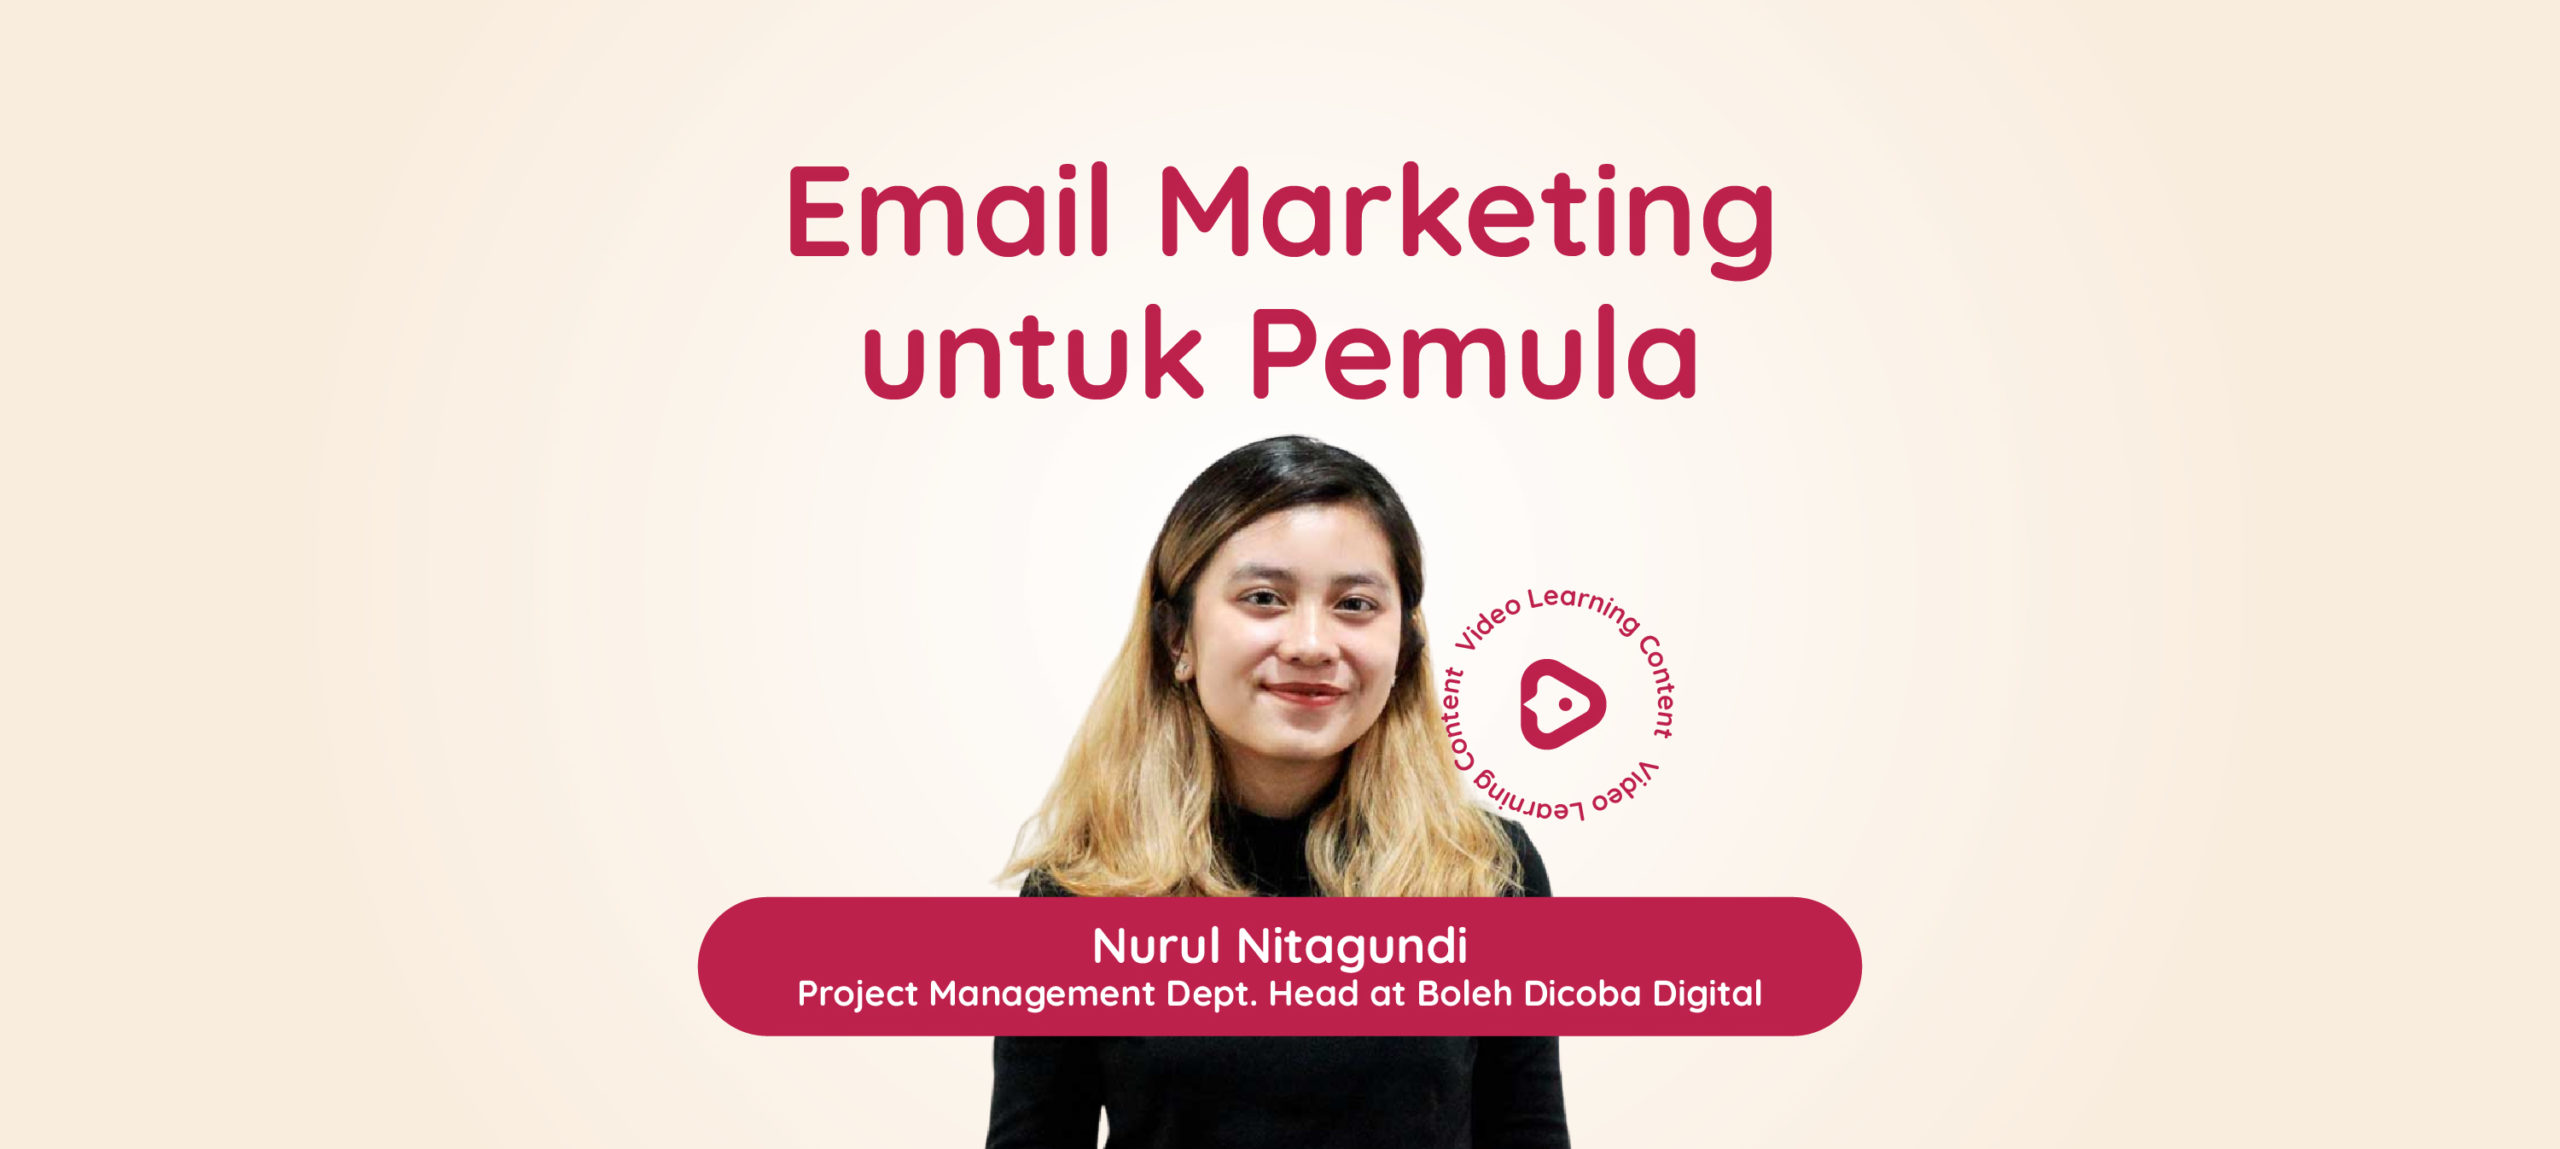 Email Marketing 101: Cara menjalankan Email Marketing